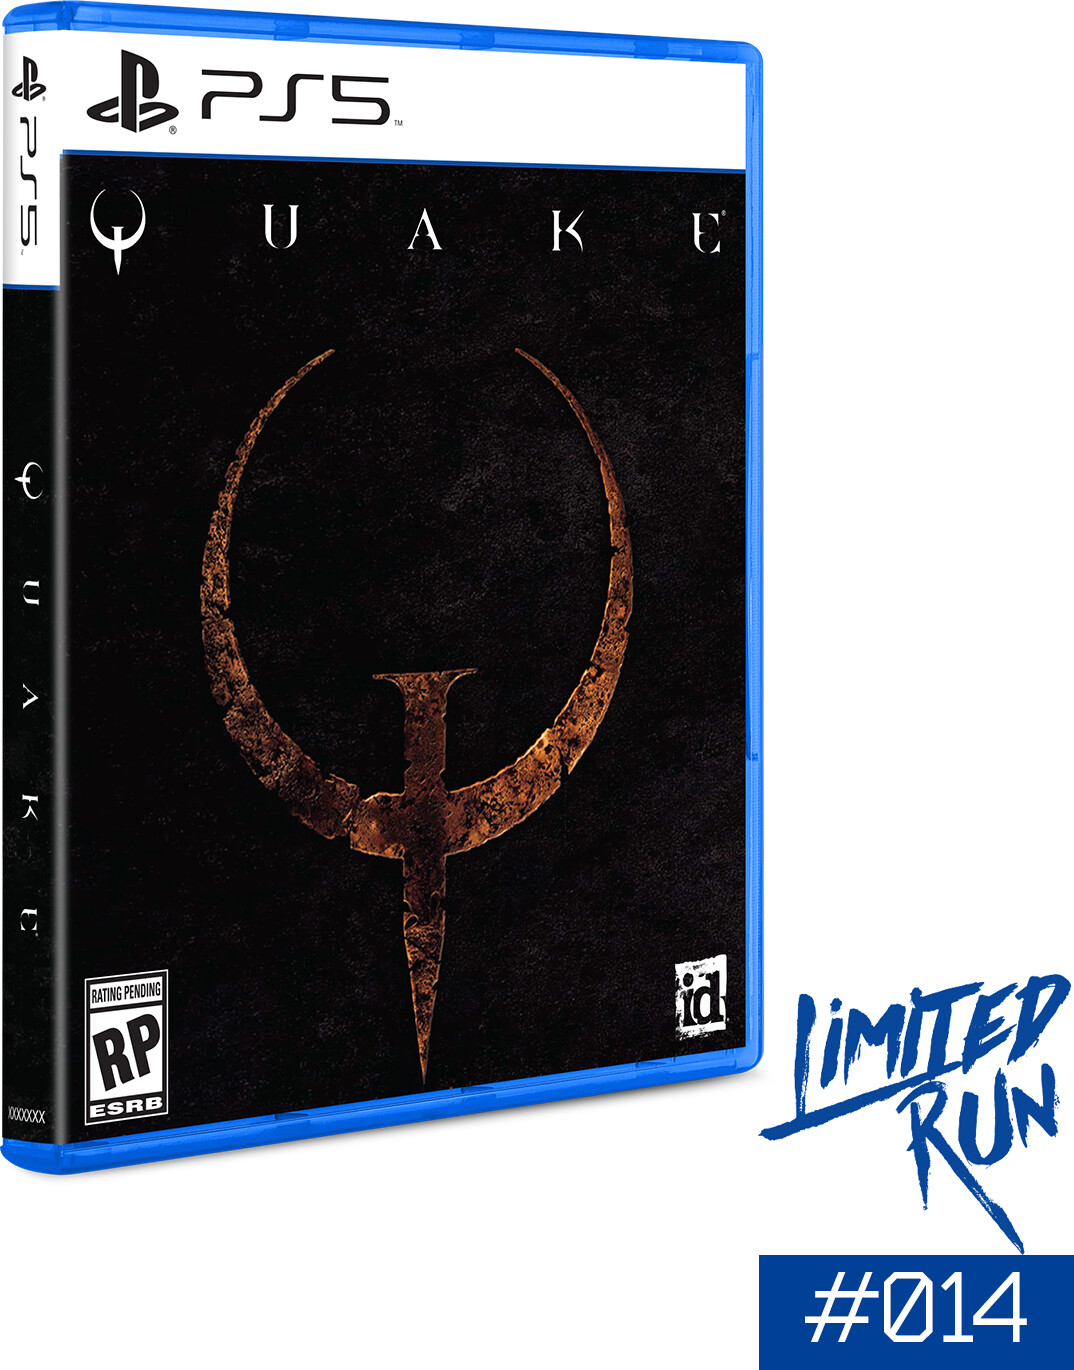 Se Quake (limited Run #014) (import) - PS5 hos Gucca.dk